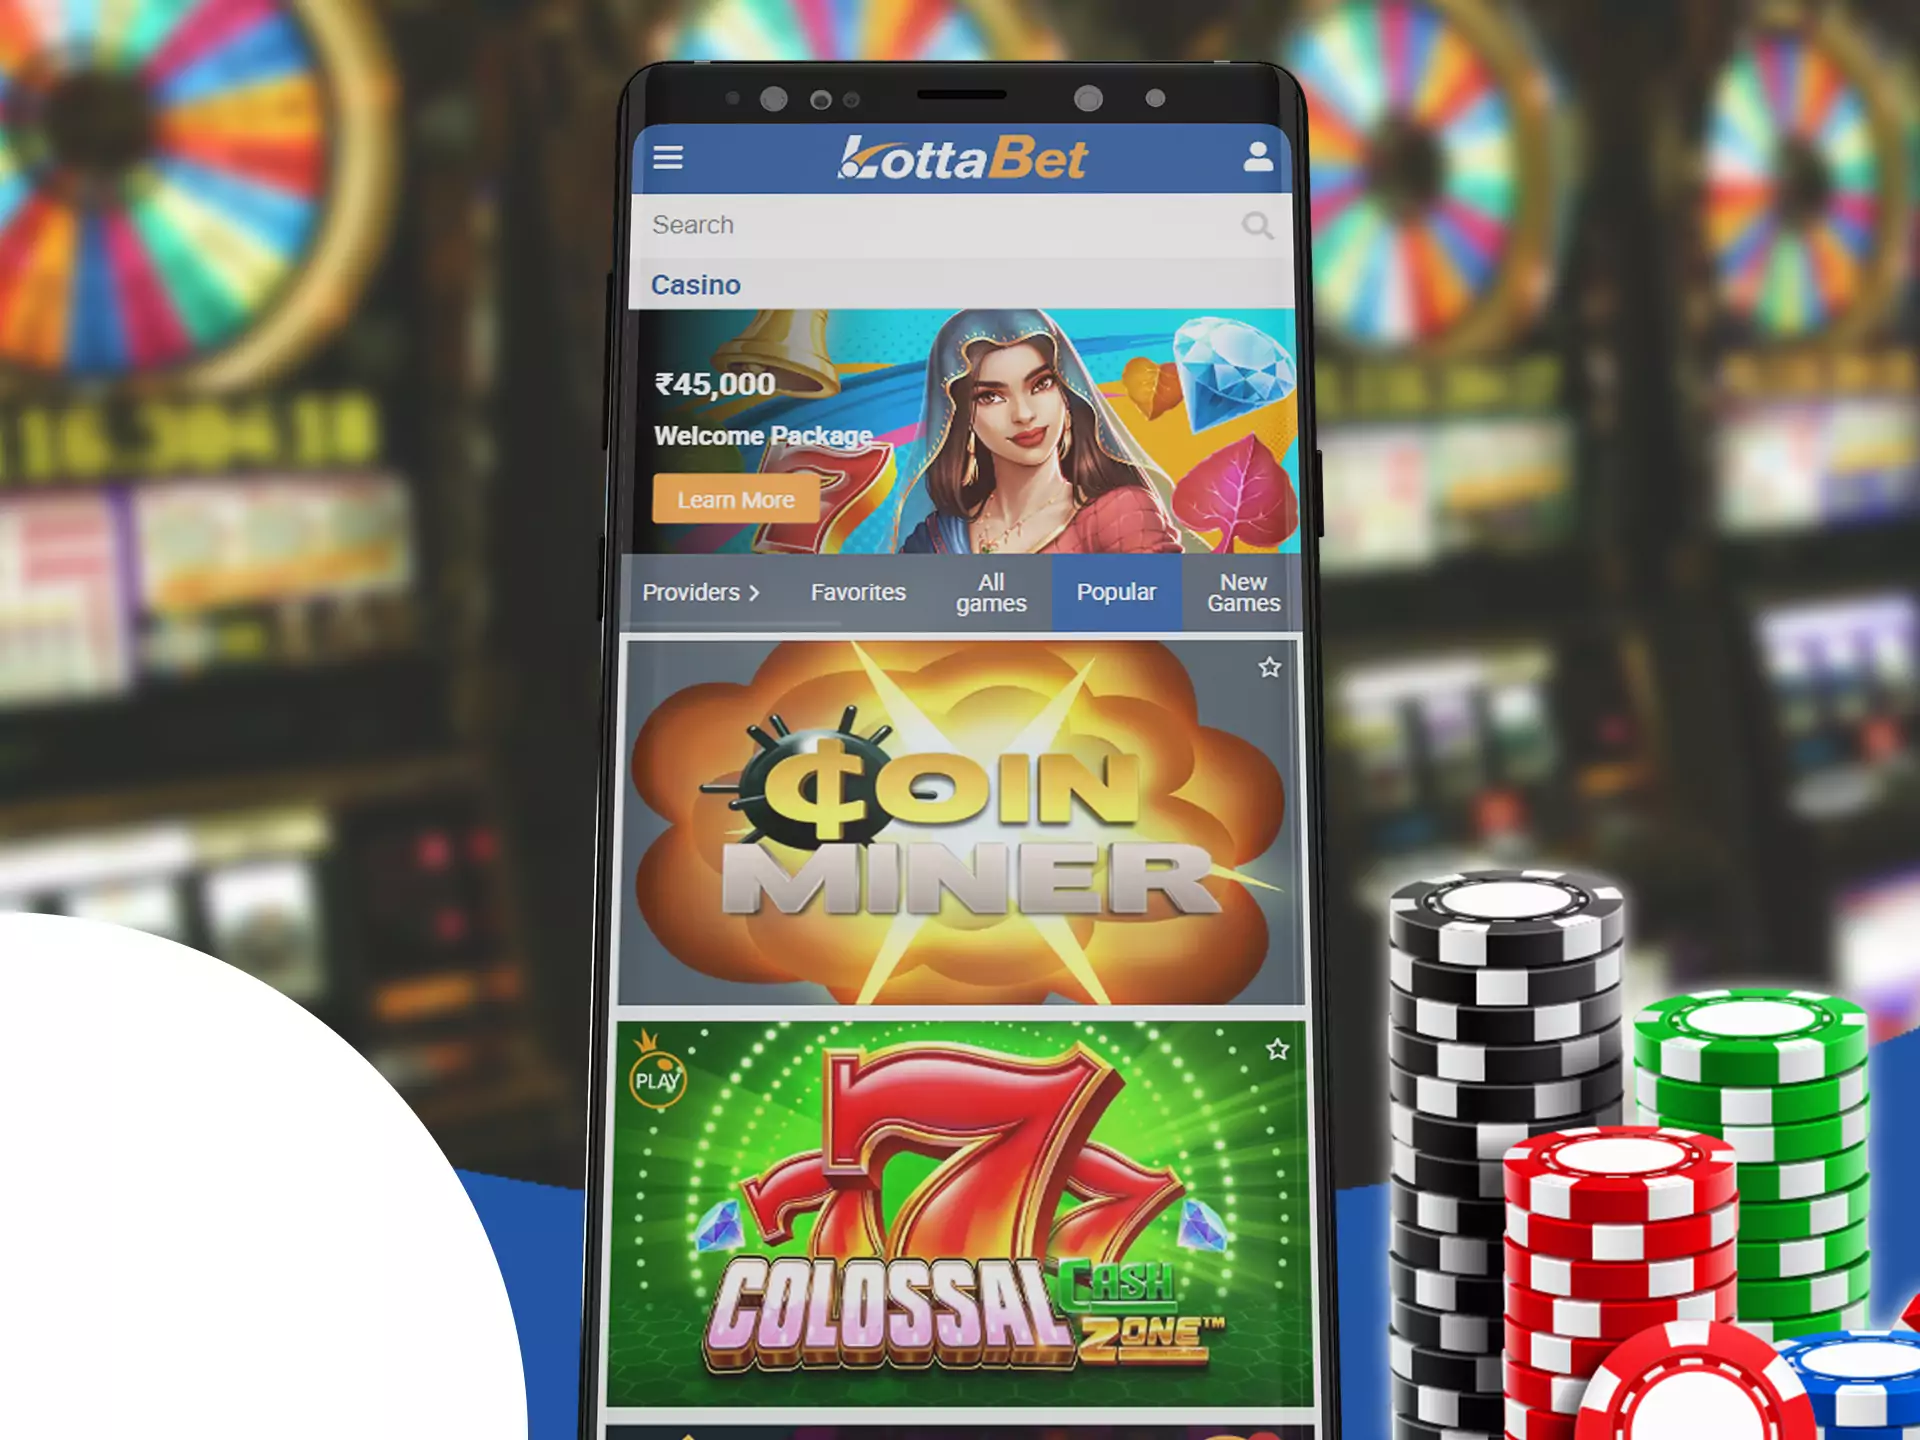 Play casino games using LottaBet app.